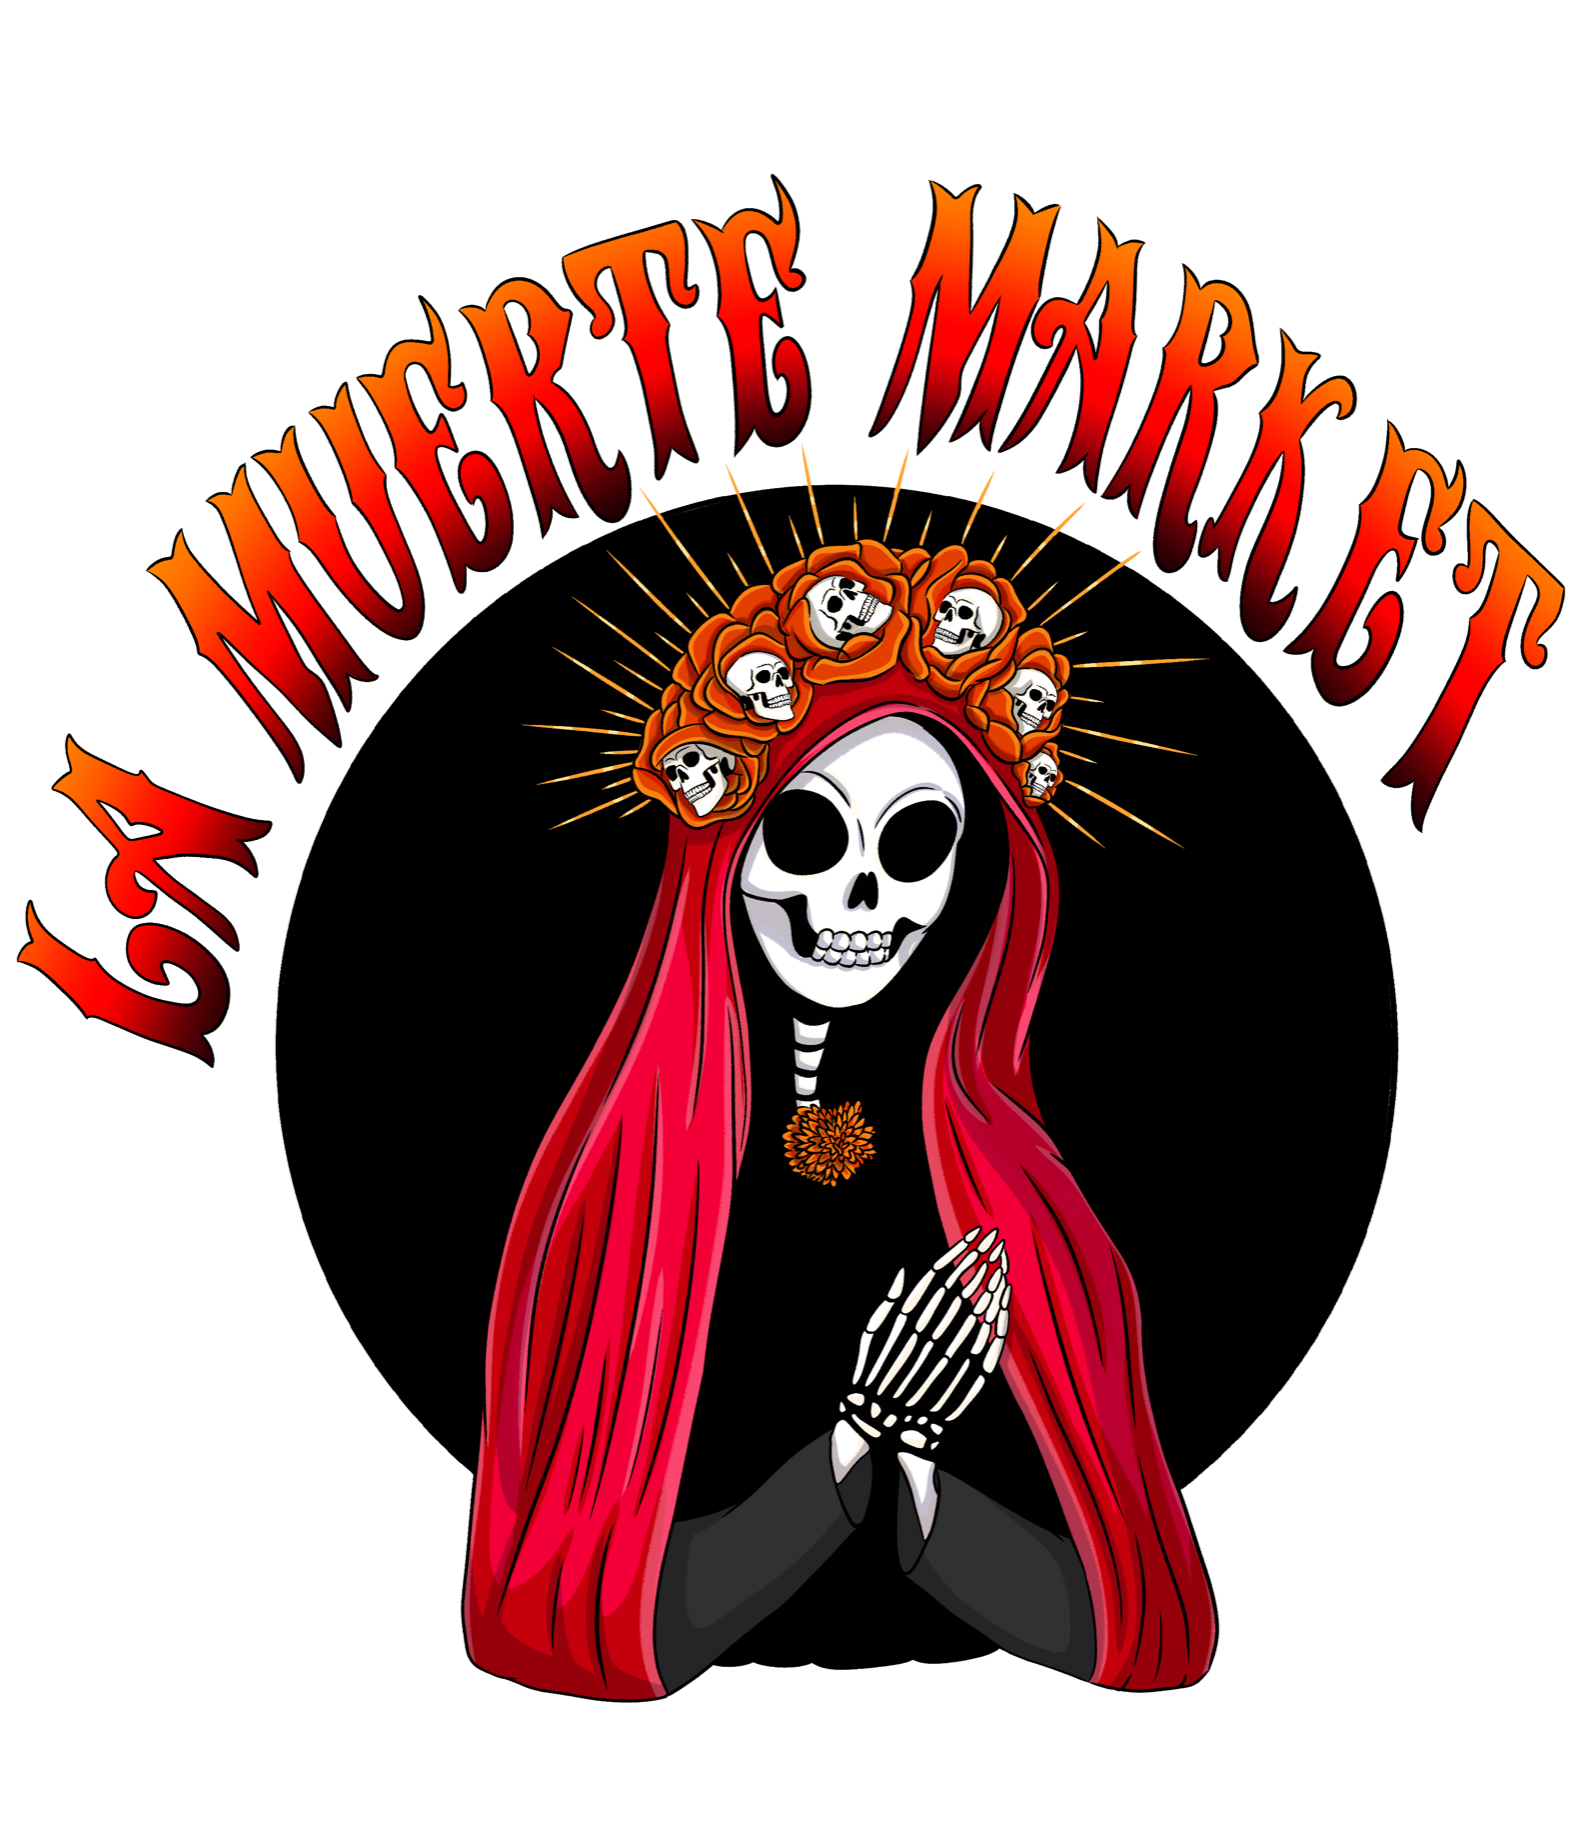 La Muerte Market